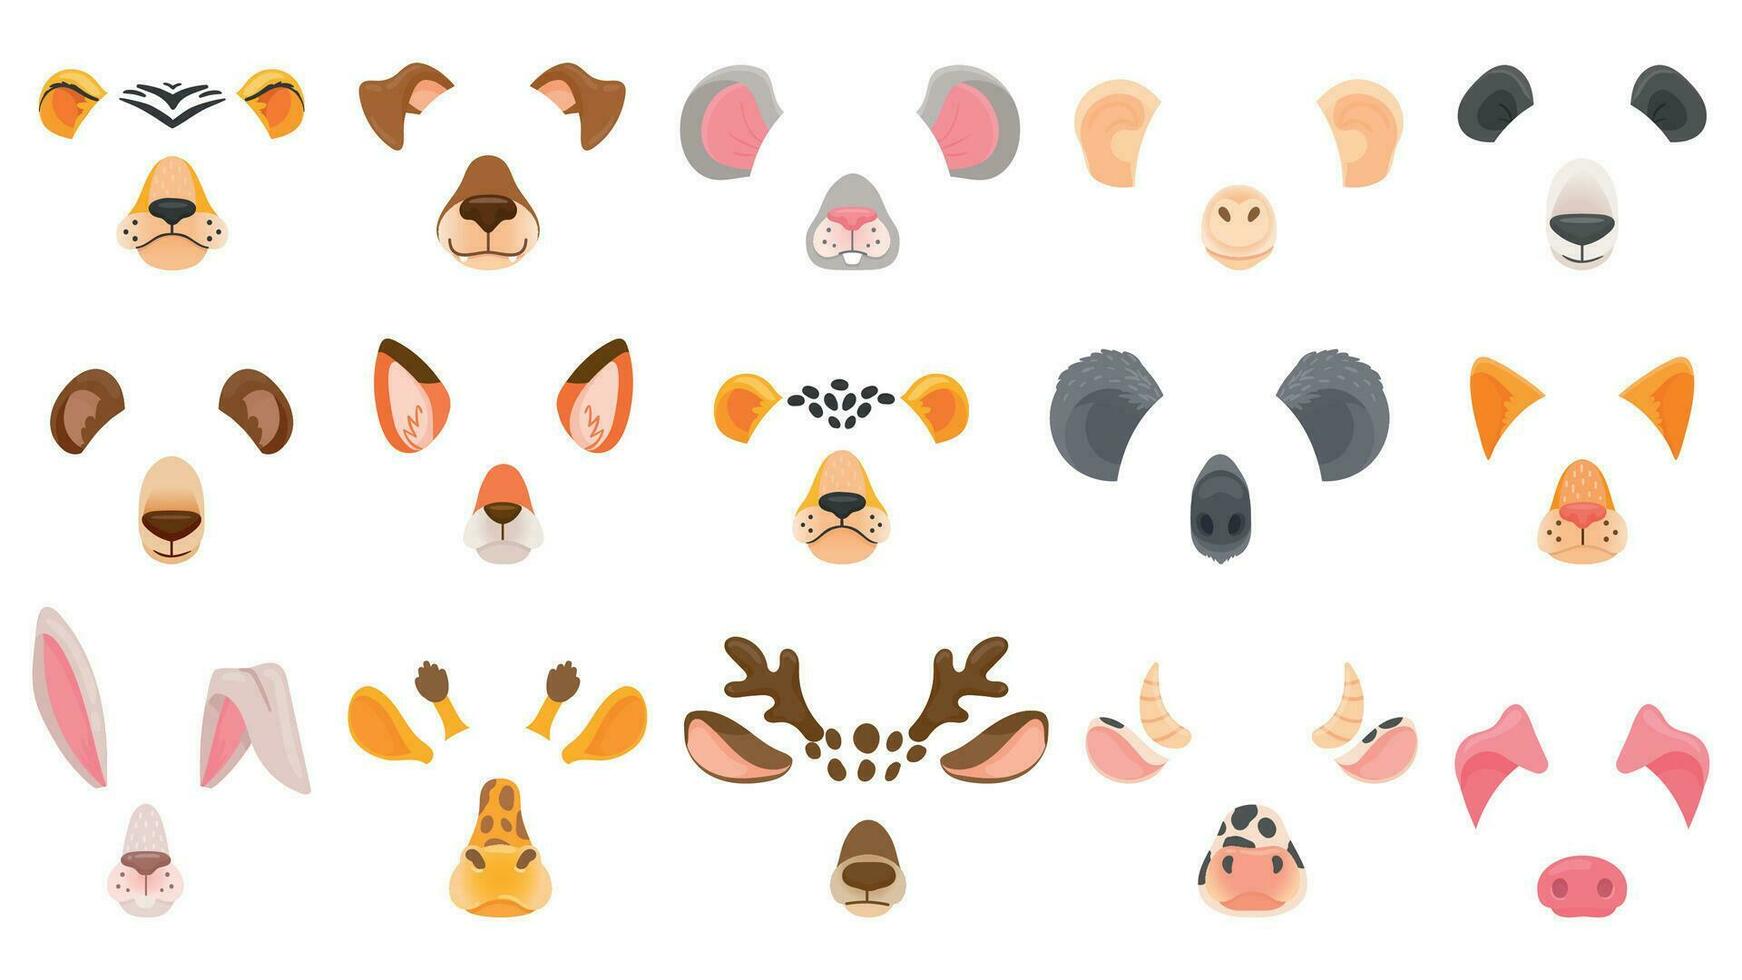 Animal face for video chat. Filter masks of animals. Fox, panda and koala, deer and bear, cheetah and tiger, dog and cat. Cartoon vector set